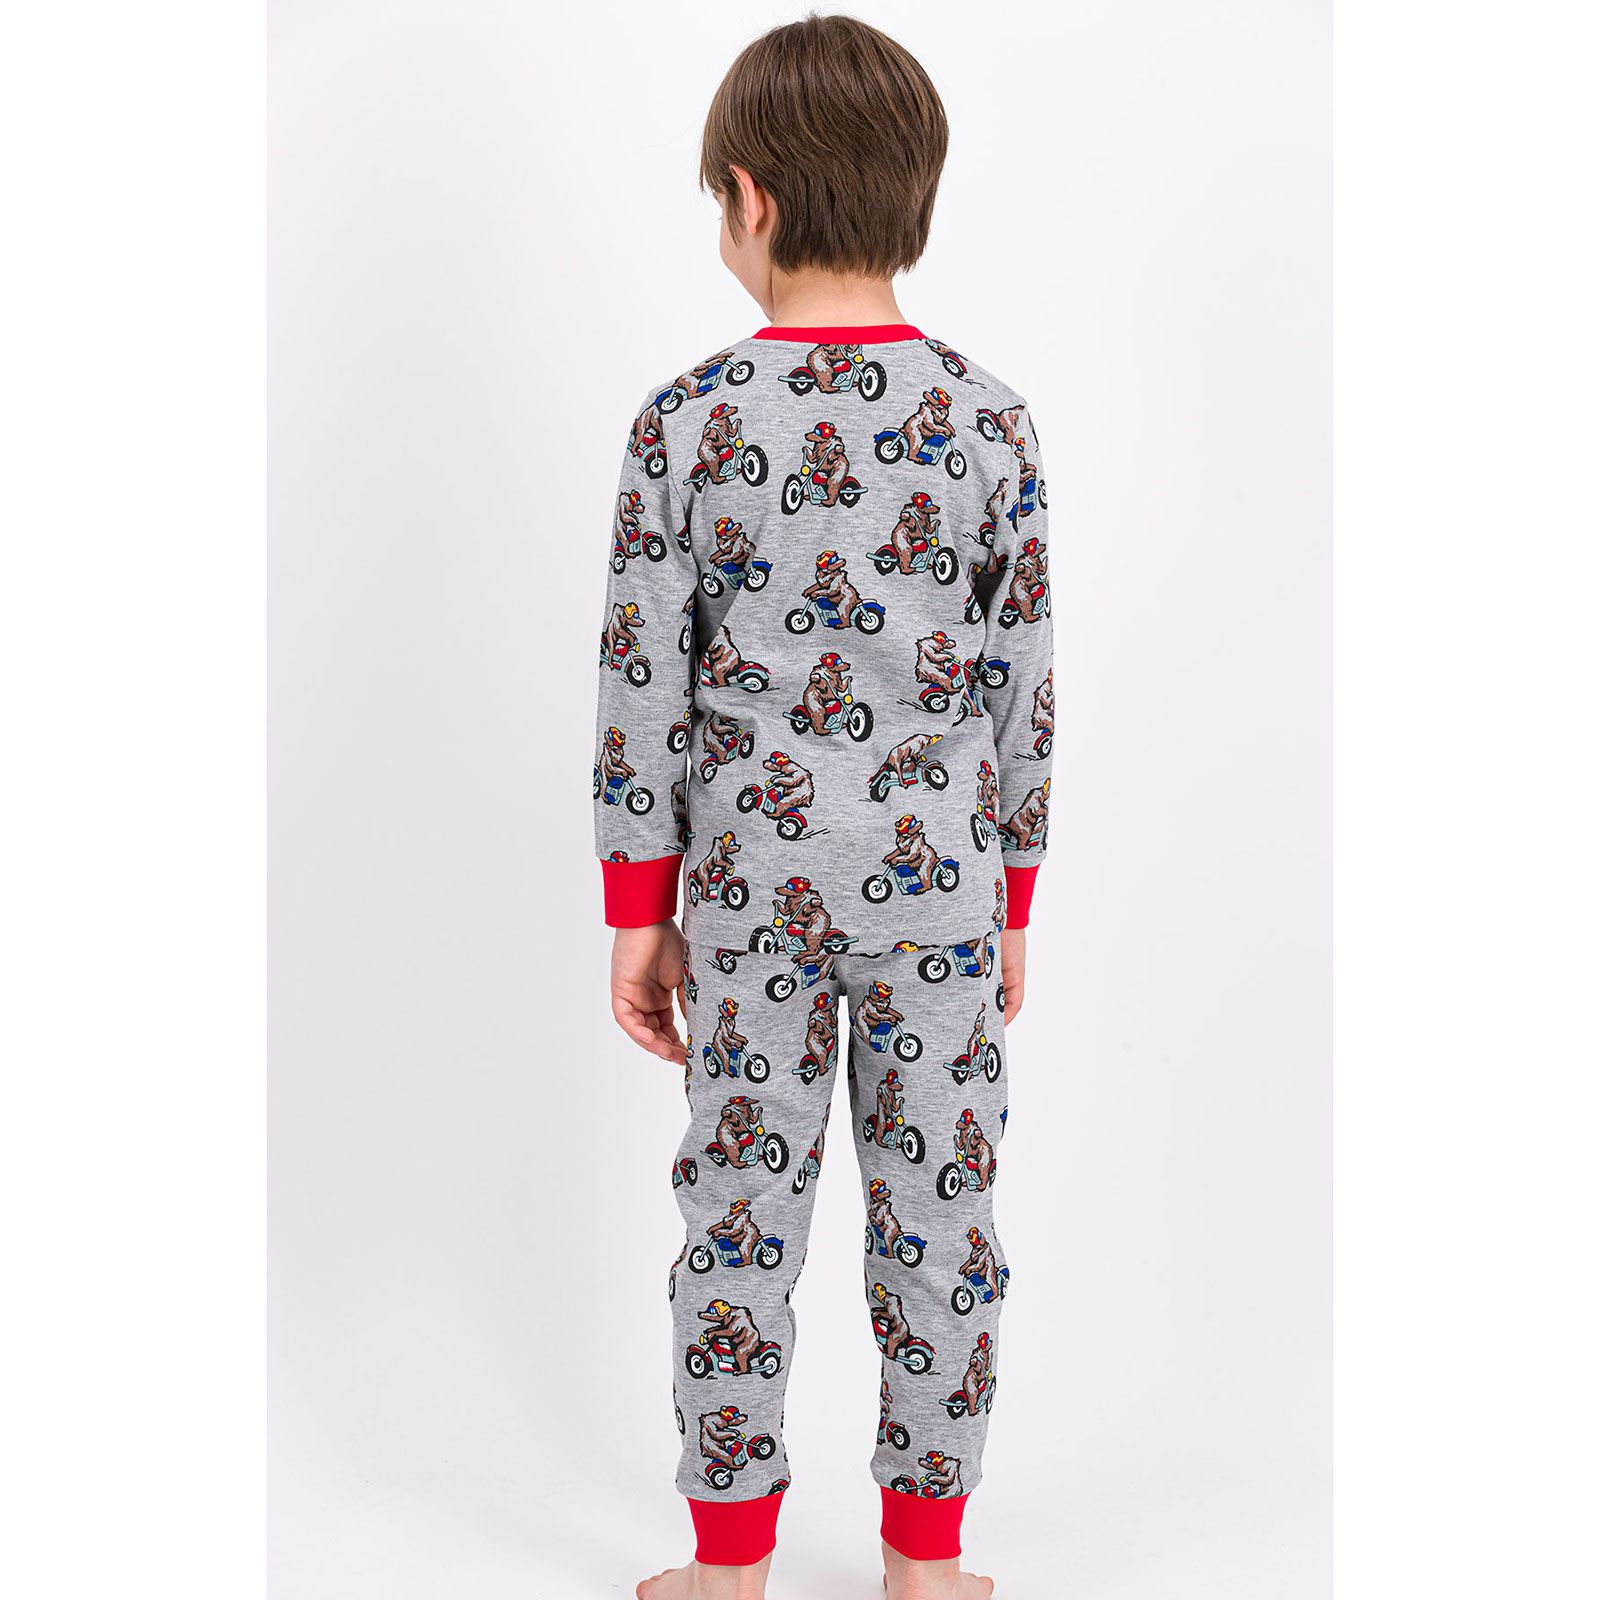 Roly Poly Erkek Çocuk Pijama Takımı 2-7 Yaş Gri